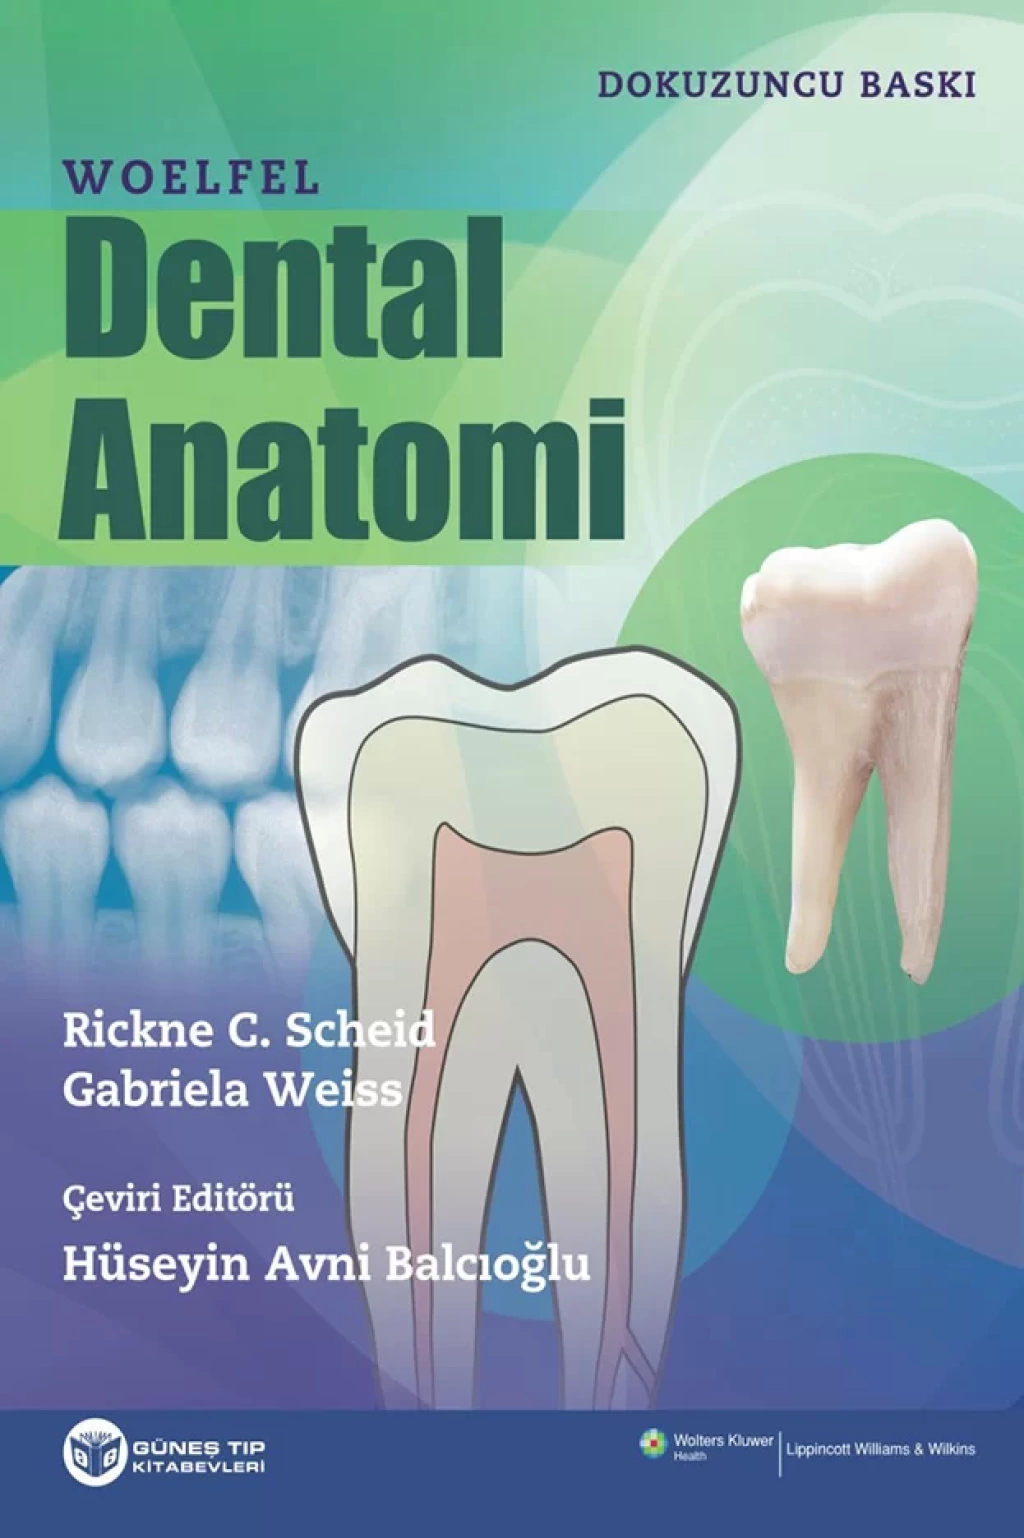 Anatomi-　Dental　Woelfel　9789752777361